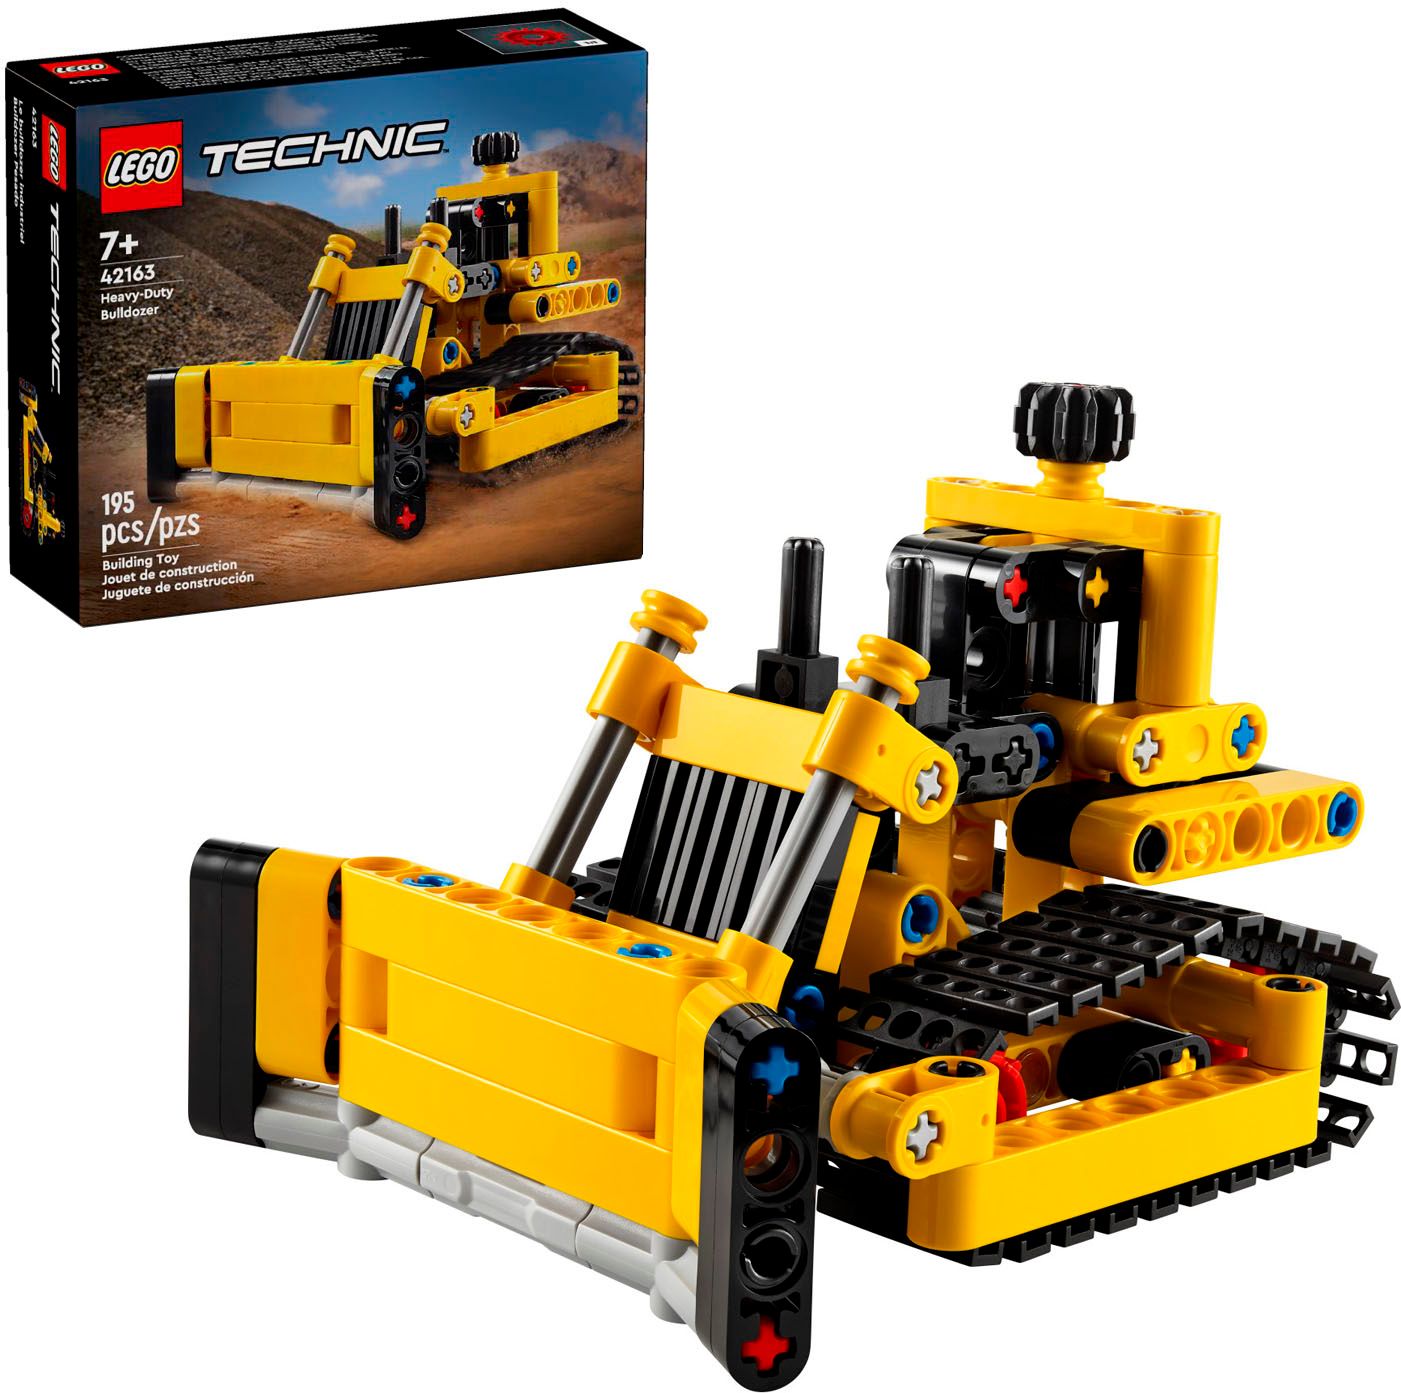 LEGO Technic Heavy-Duty Bulldozer Building Set, Construction Toy 42163 6463109 - Best Buy | Best Buy U.S.